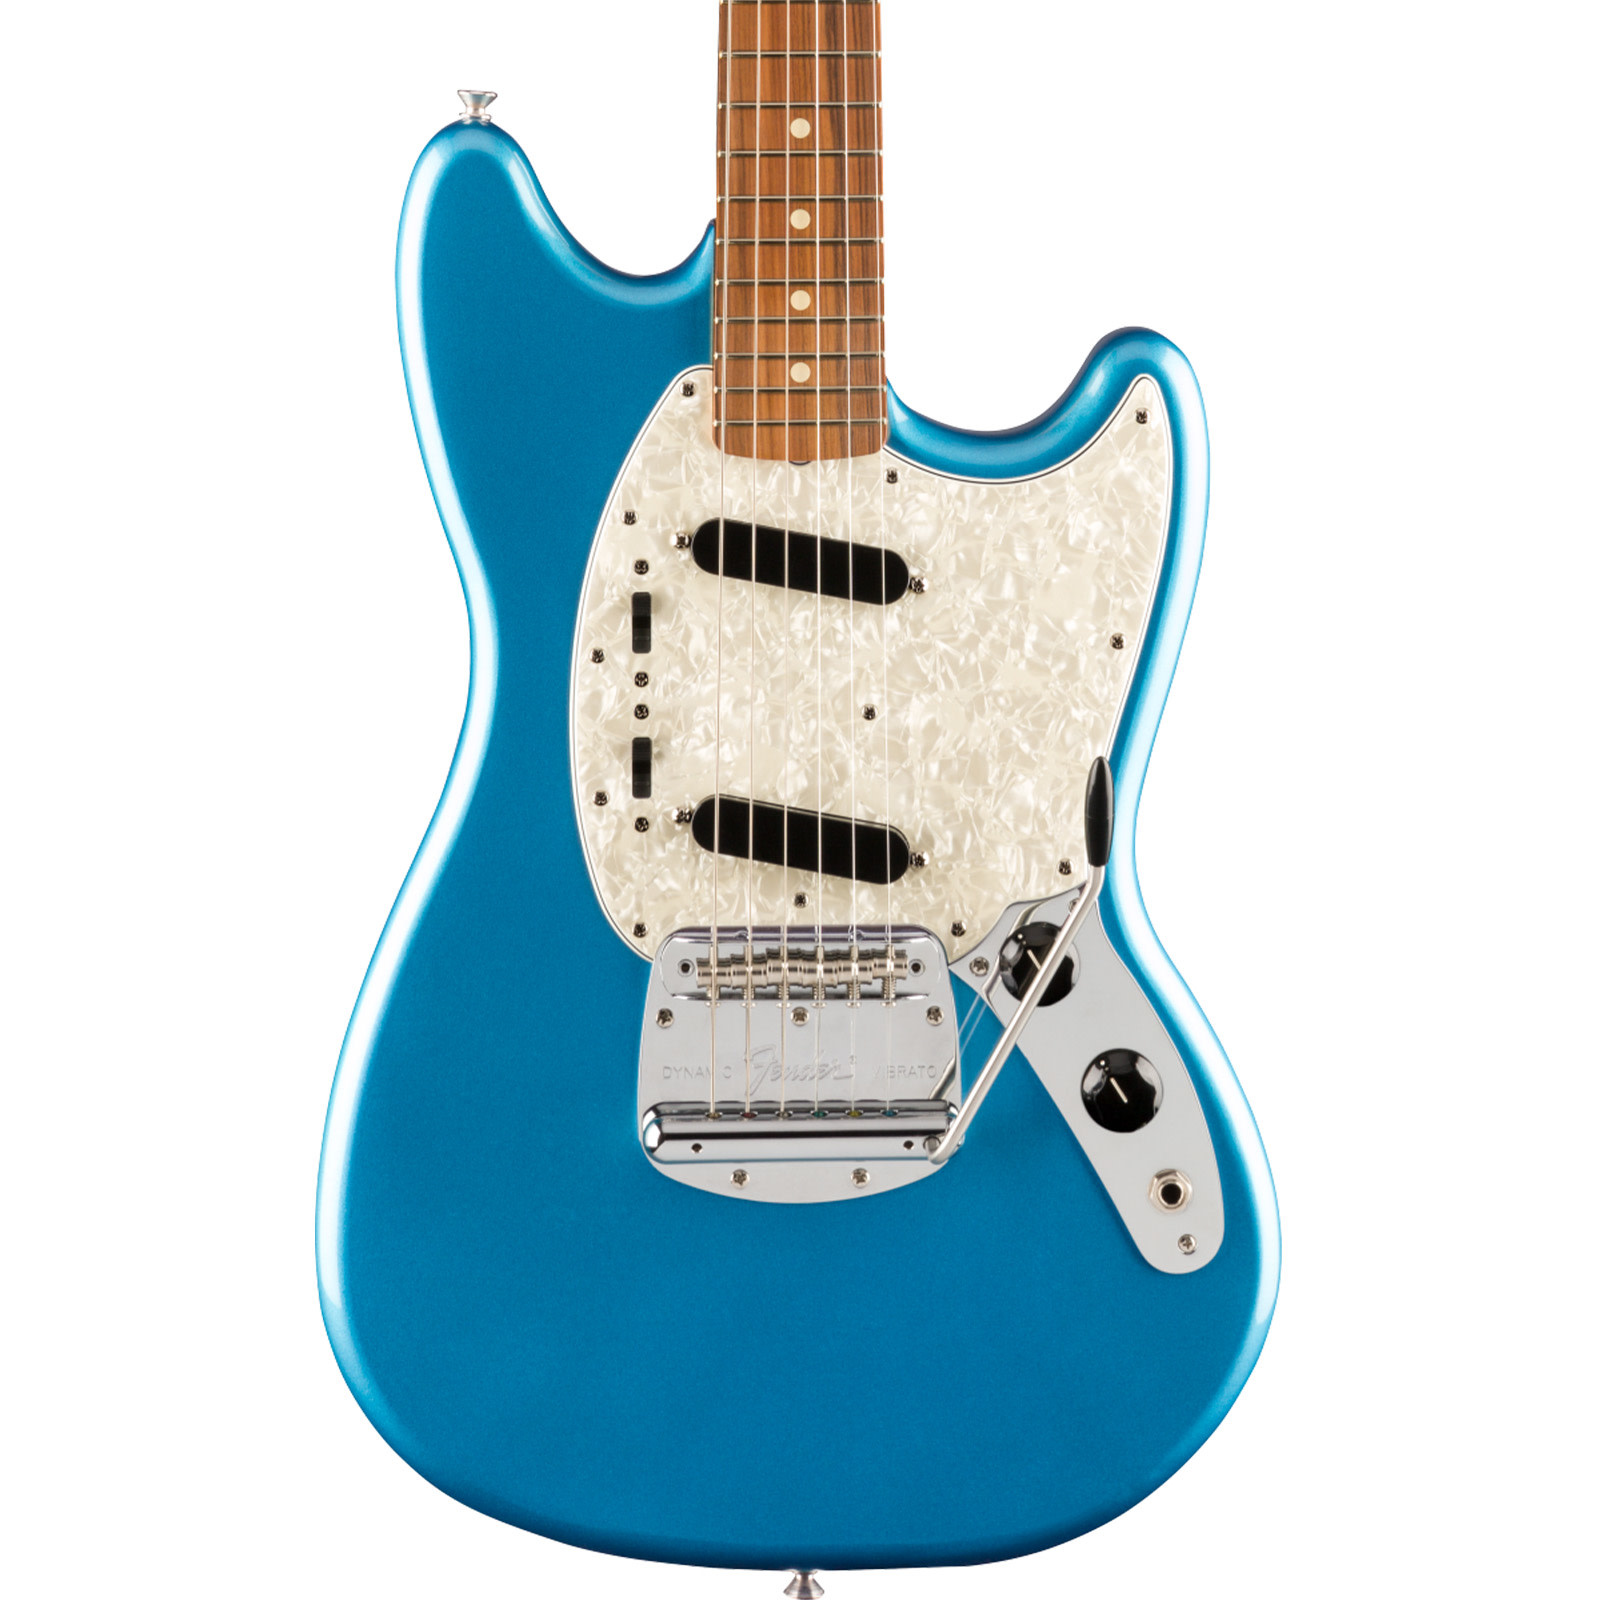 Гитара мустанг. Fender VINTERA 60s Mustang Lake Placid Blue. Fender Mustang Lake Placid Blue. Fender Mustang Guitar. Fender Mustang VINTERA 60s голубой.